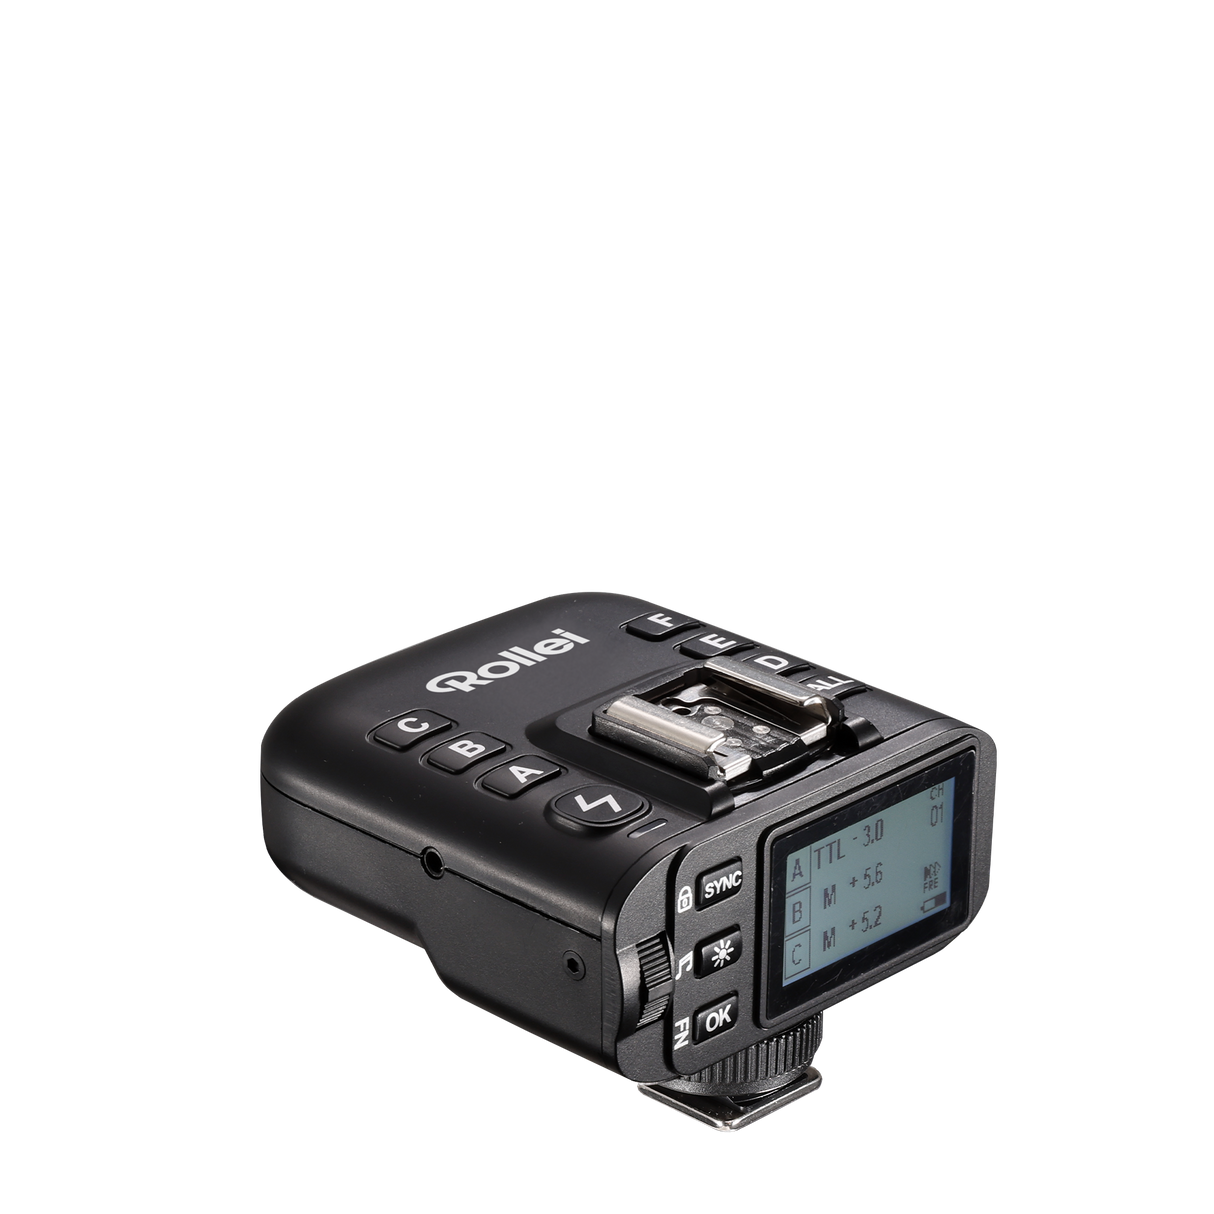 TR-Q6II Universal Studio Flash Wireless Transmitter - For Sony cameras